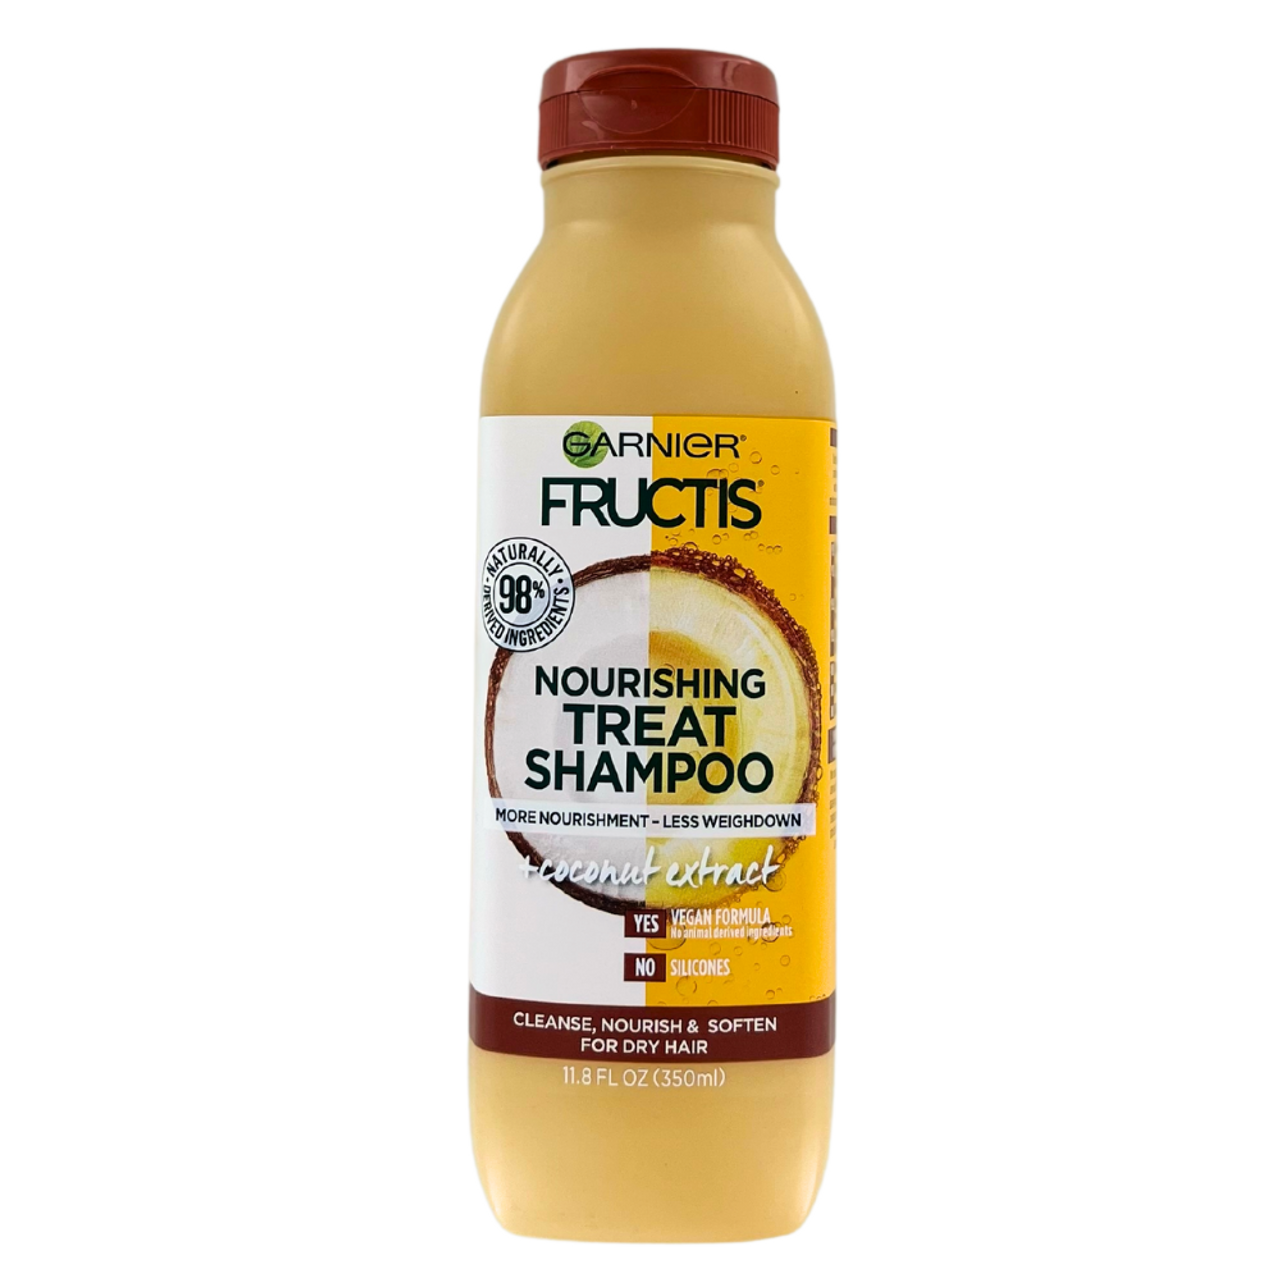 Fructis Nourishing Shampoo with Treat Garnier Extract BuyMeBeauty Coconut |